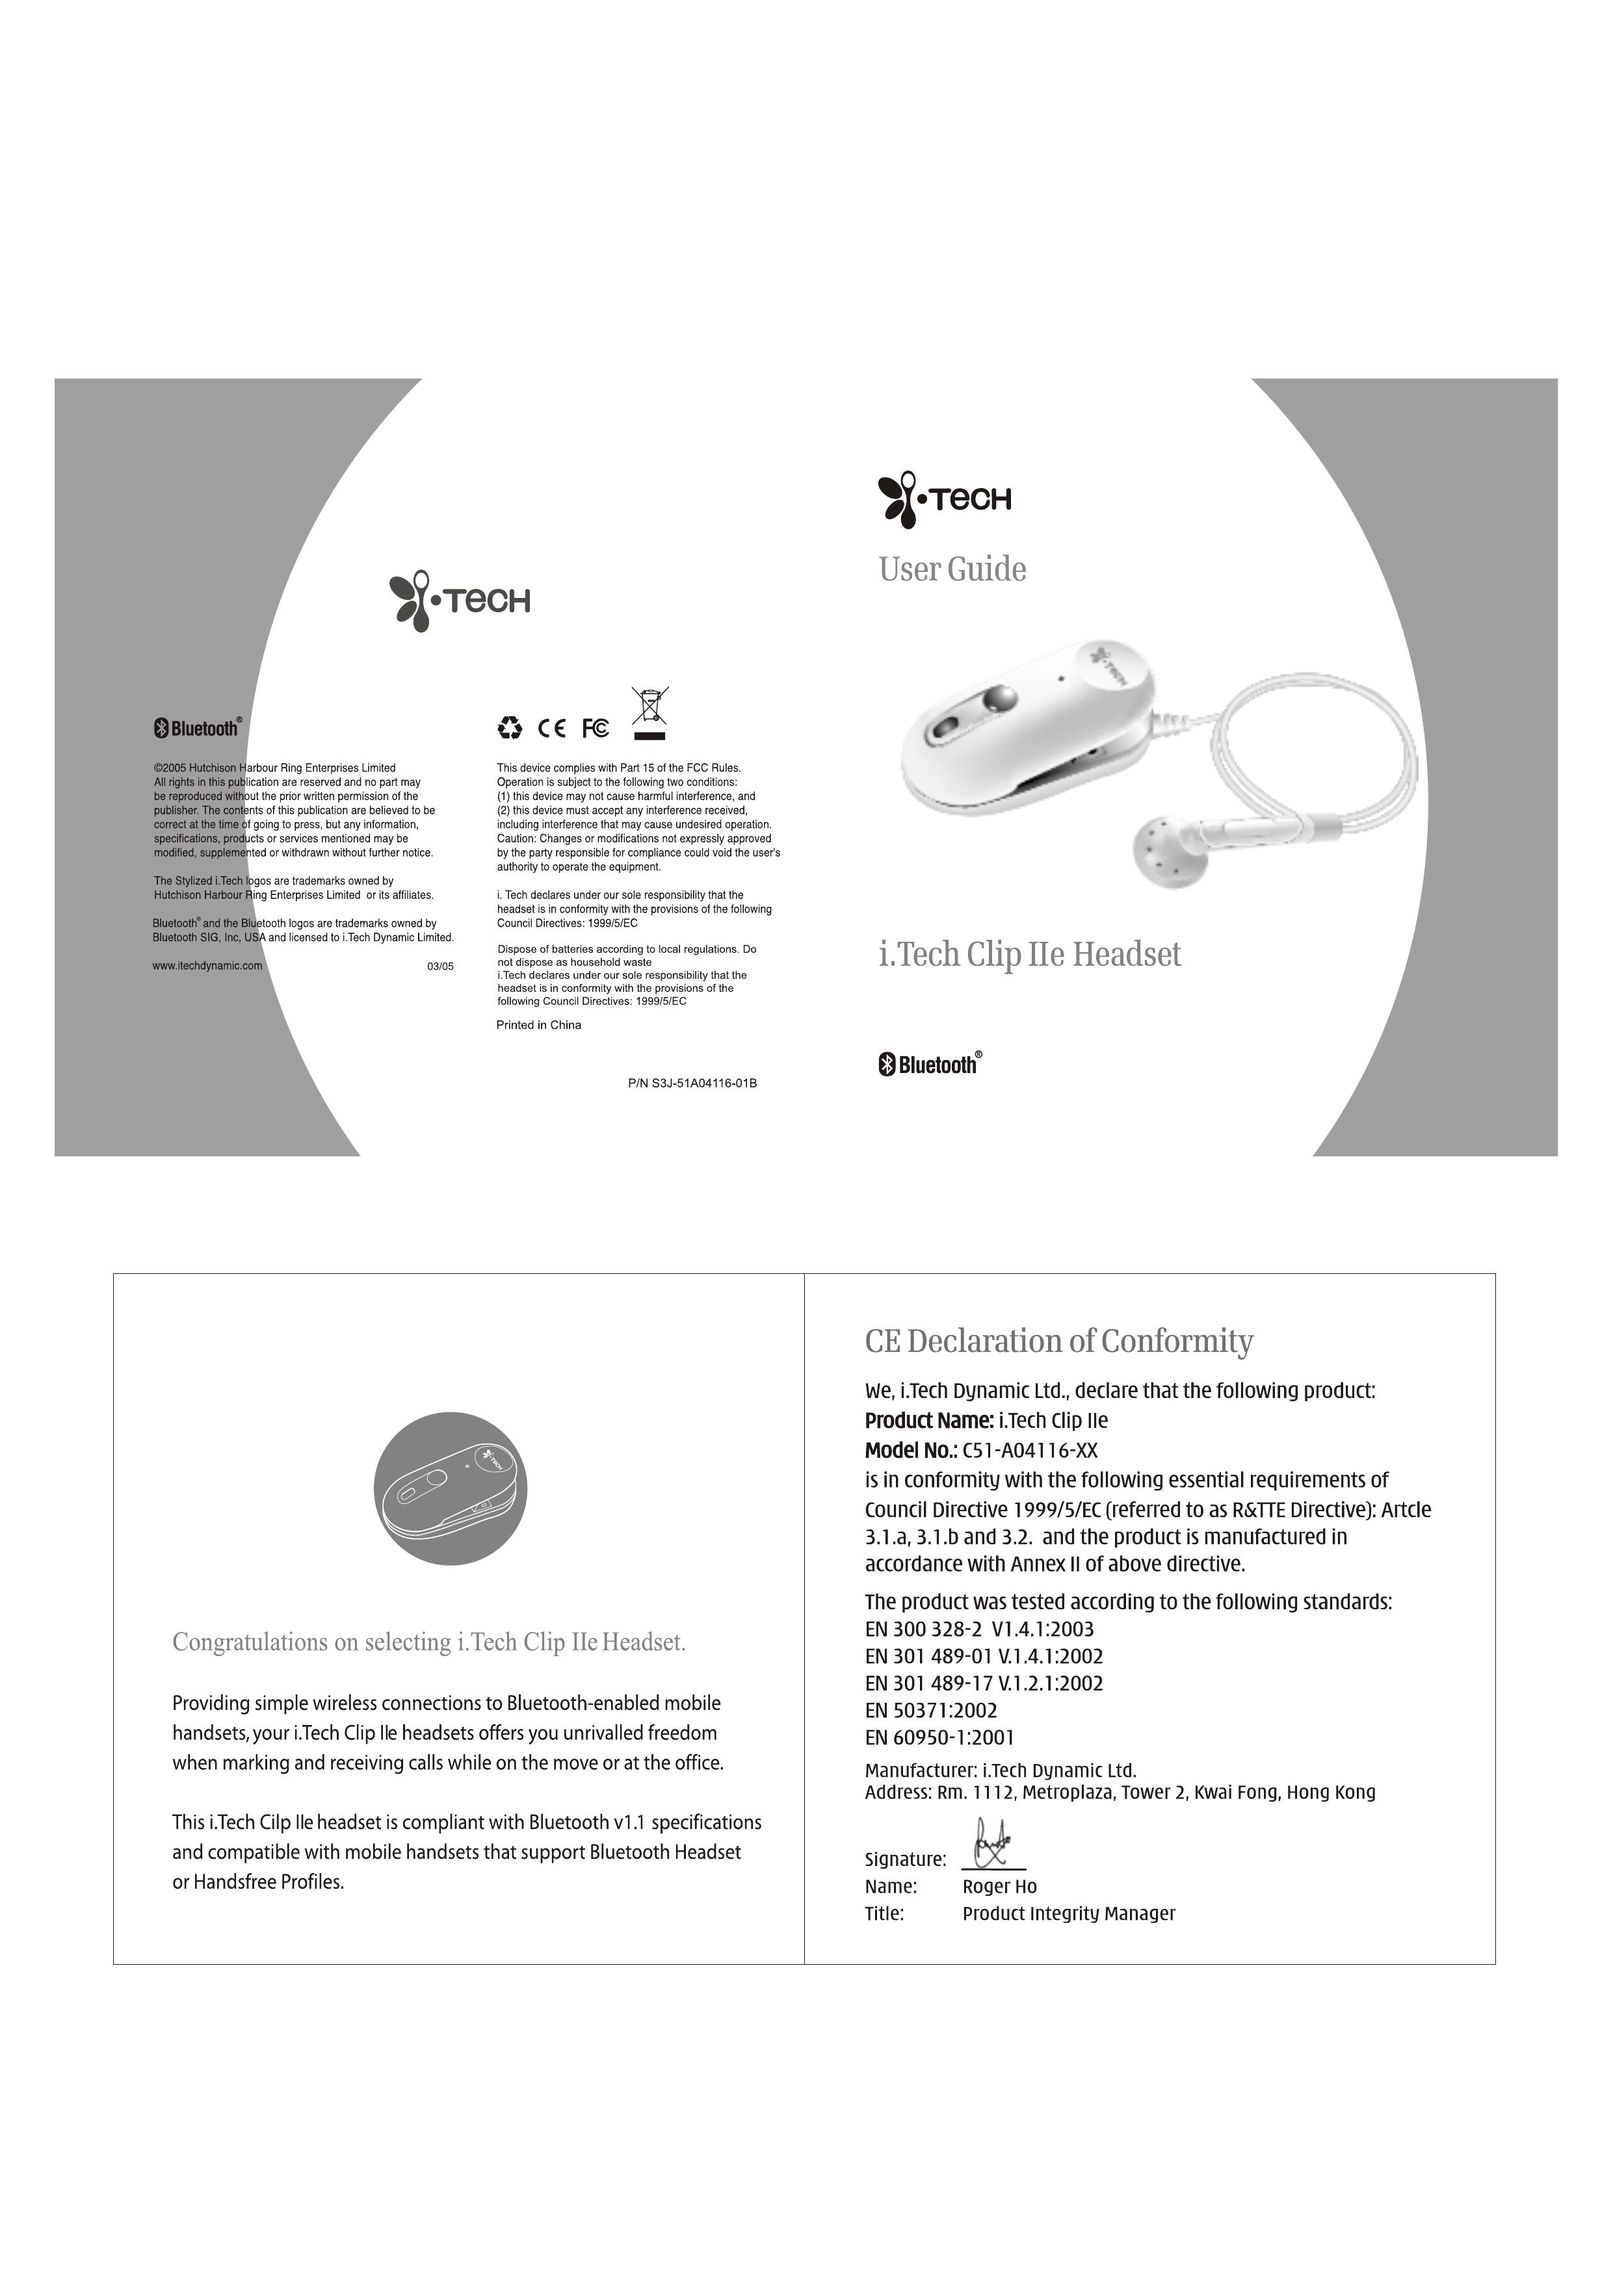 i. Tech Dynamic IIe Headphones User Manual